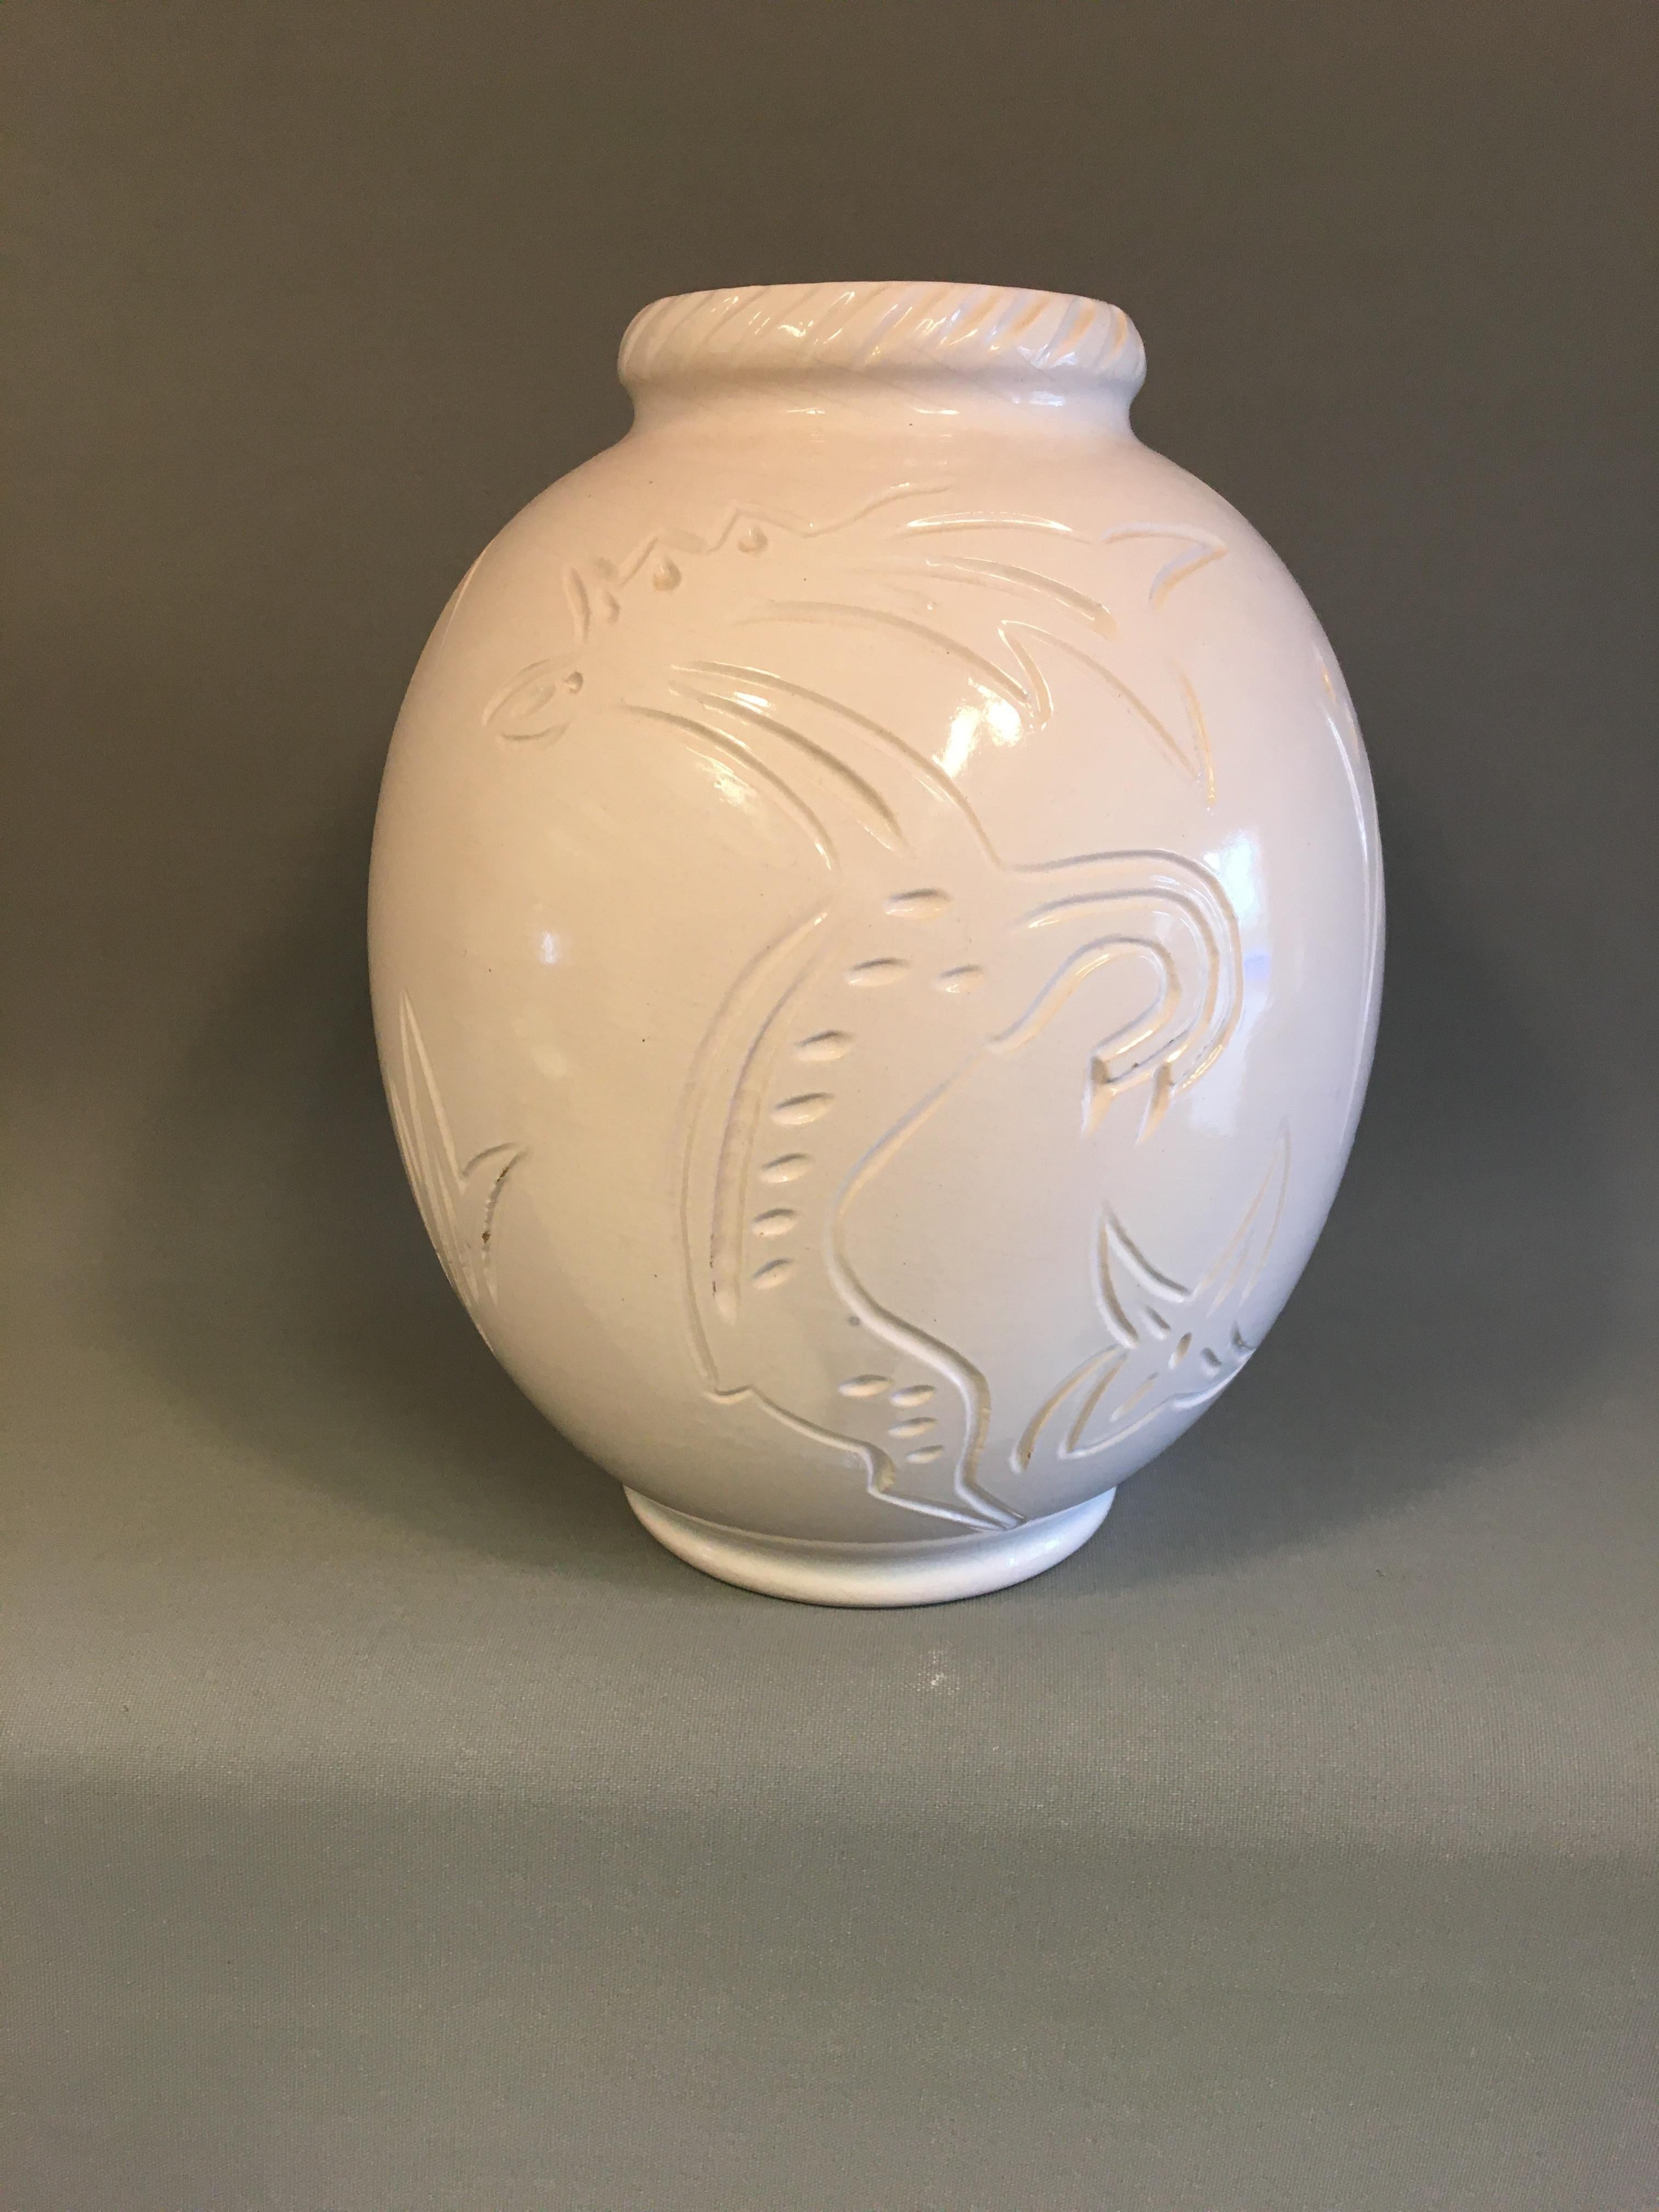 Vase Ceramics Bornholm Design: Michael Andersen white glaze with sphinx animal / flower motifs.
Measures: H 23 cm, Ø 17 cm.